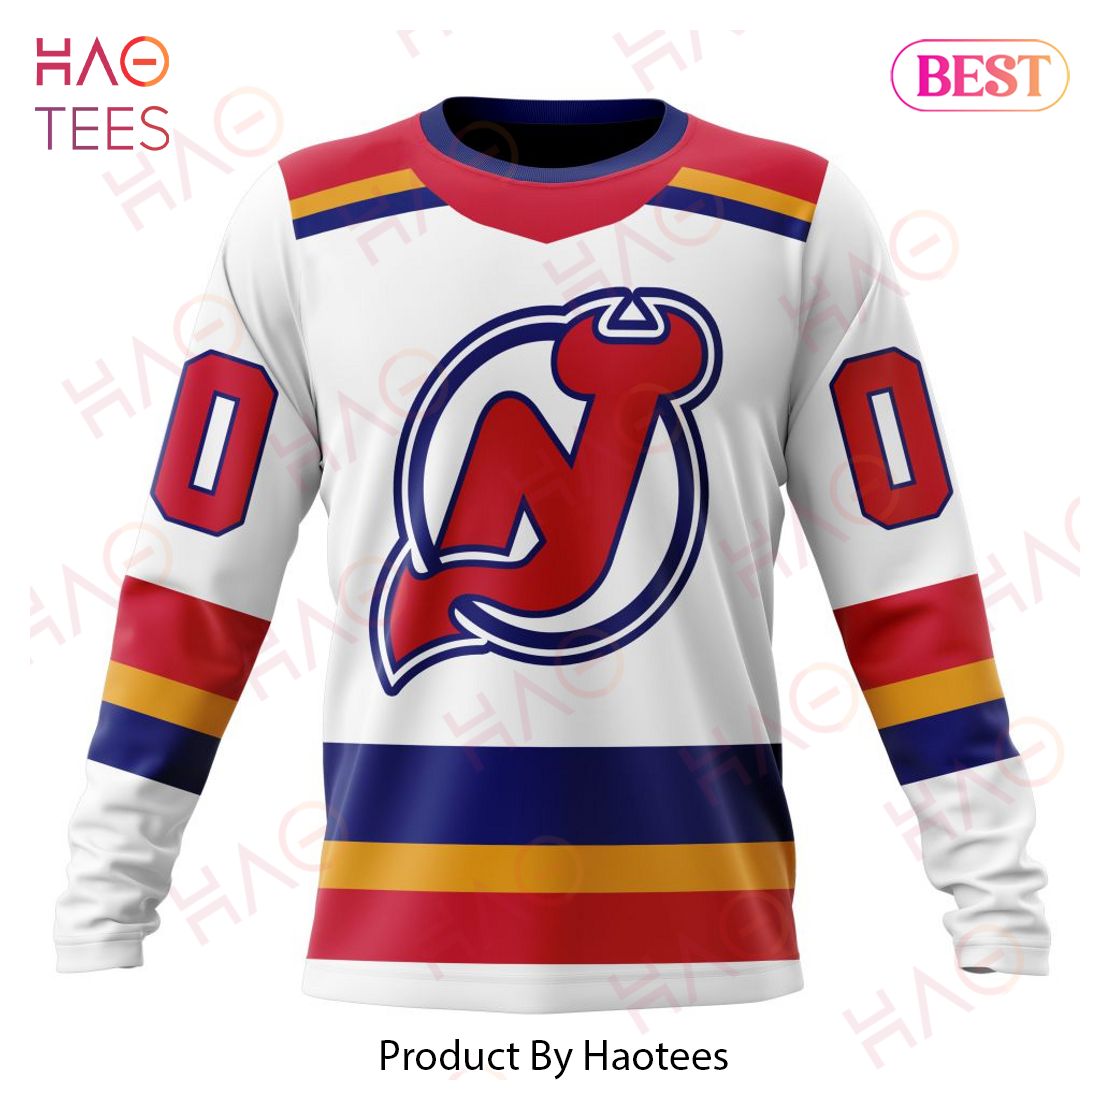 NHL New Jersey Devils Reverse Retro Kits Hoodie